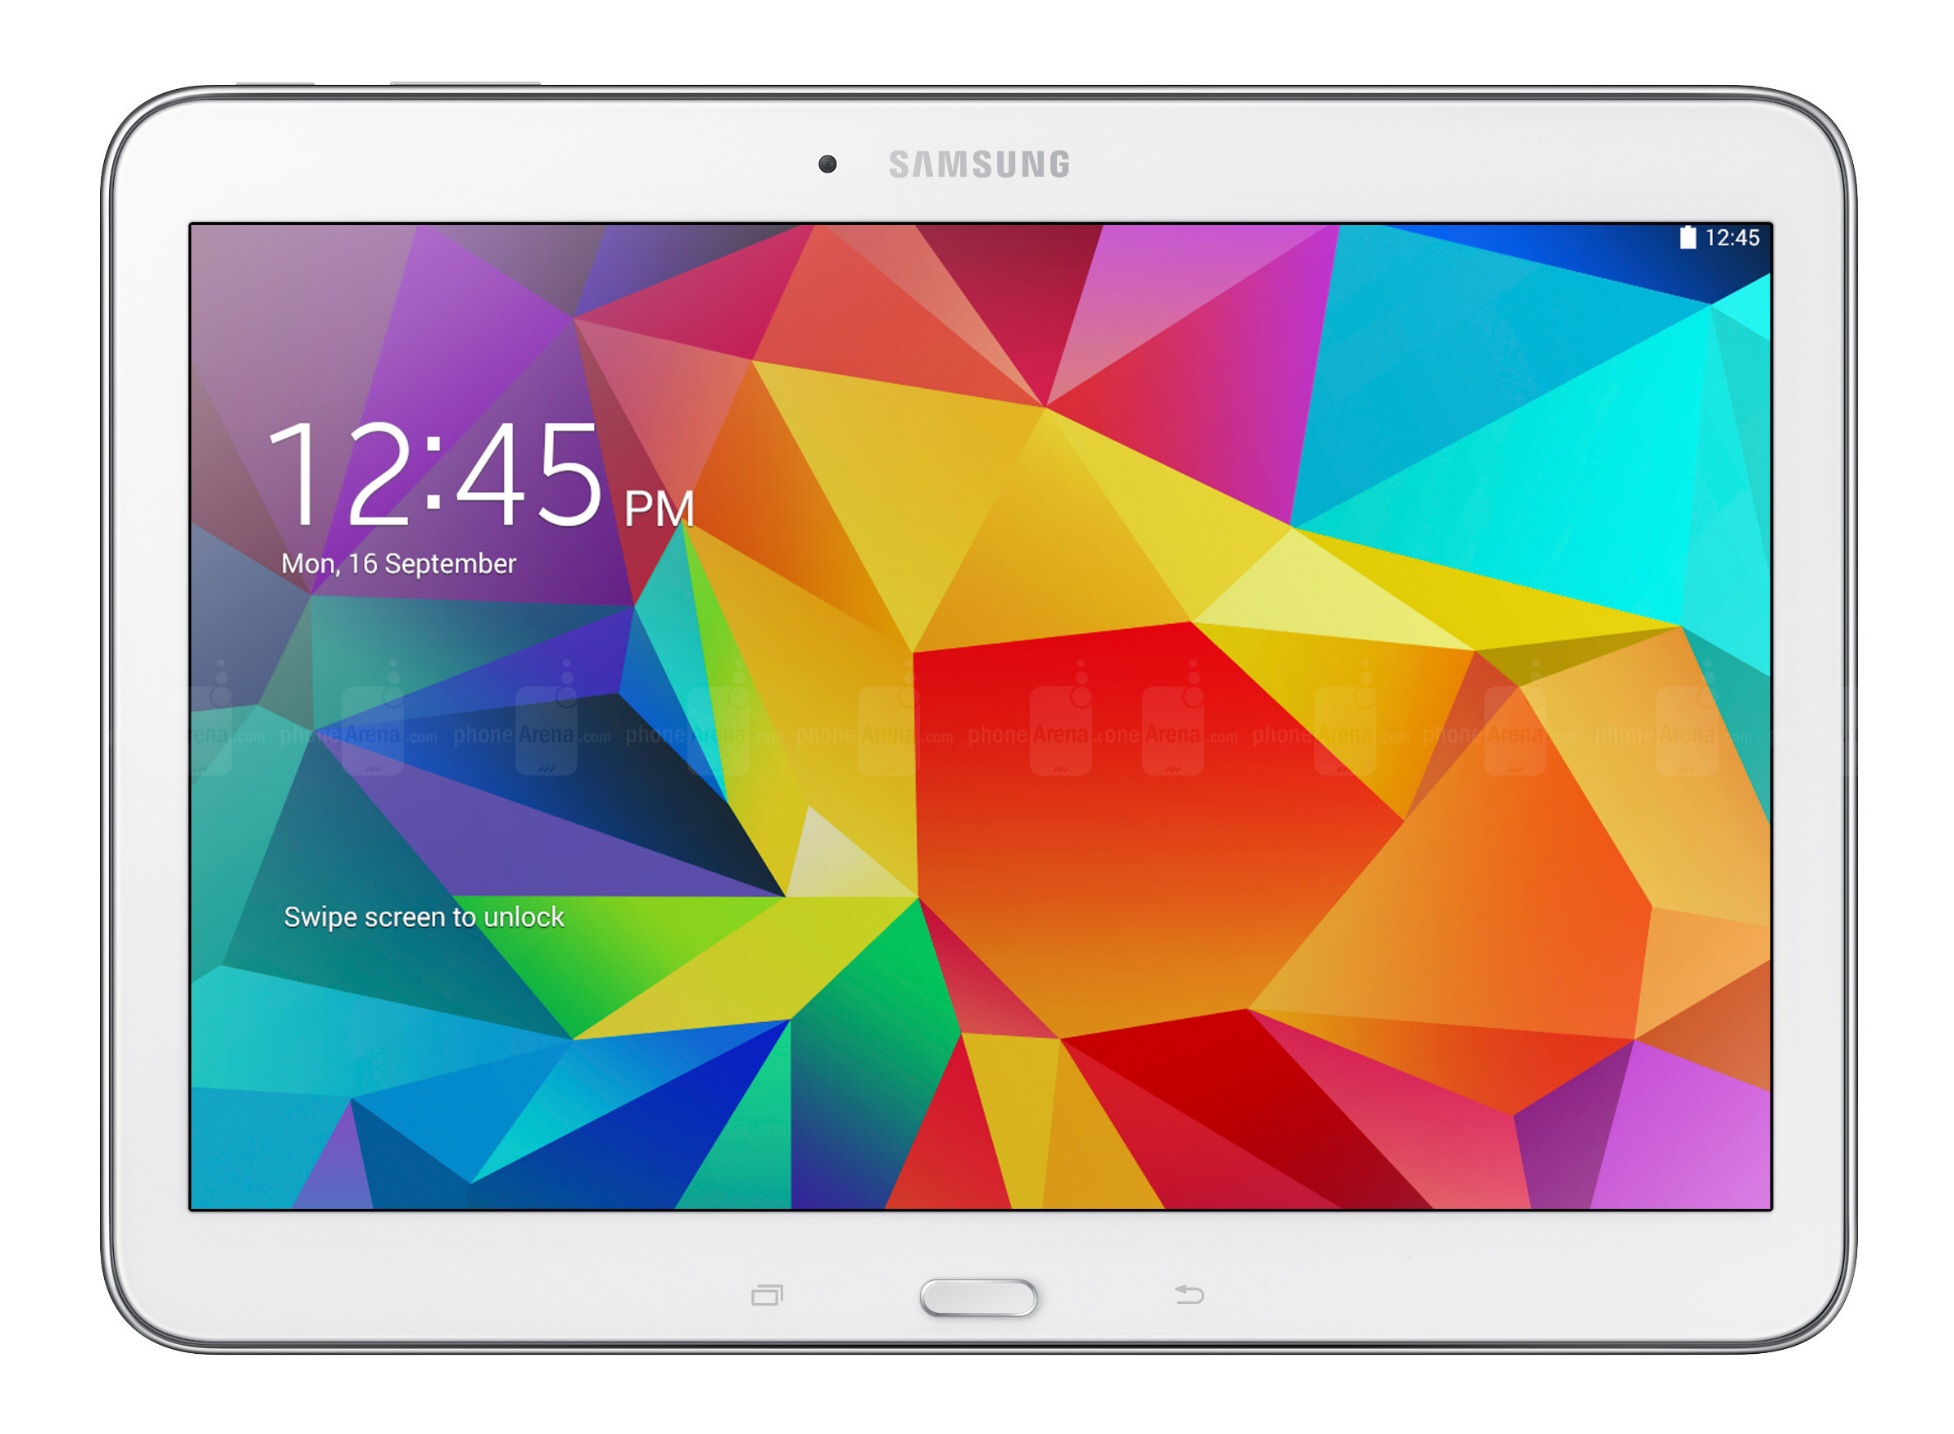 Samsung Galaxy Tab 4 10.1: Conclusion